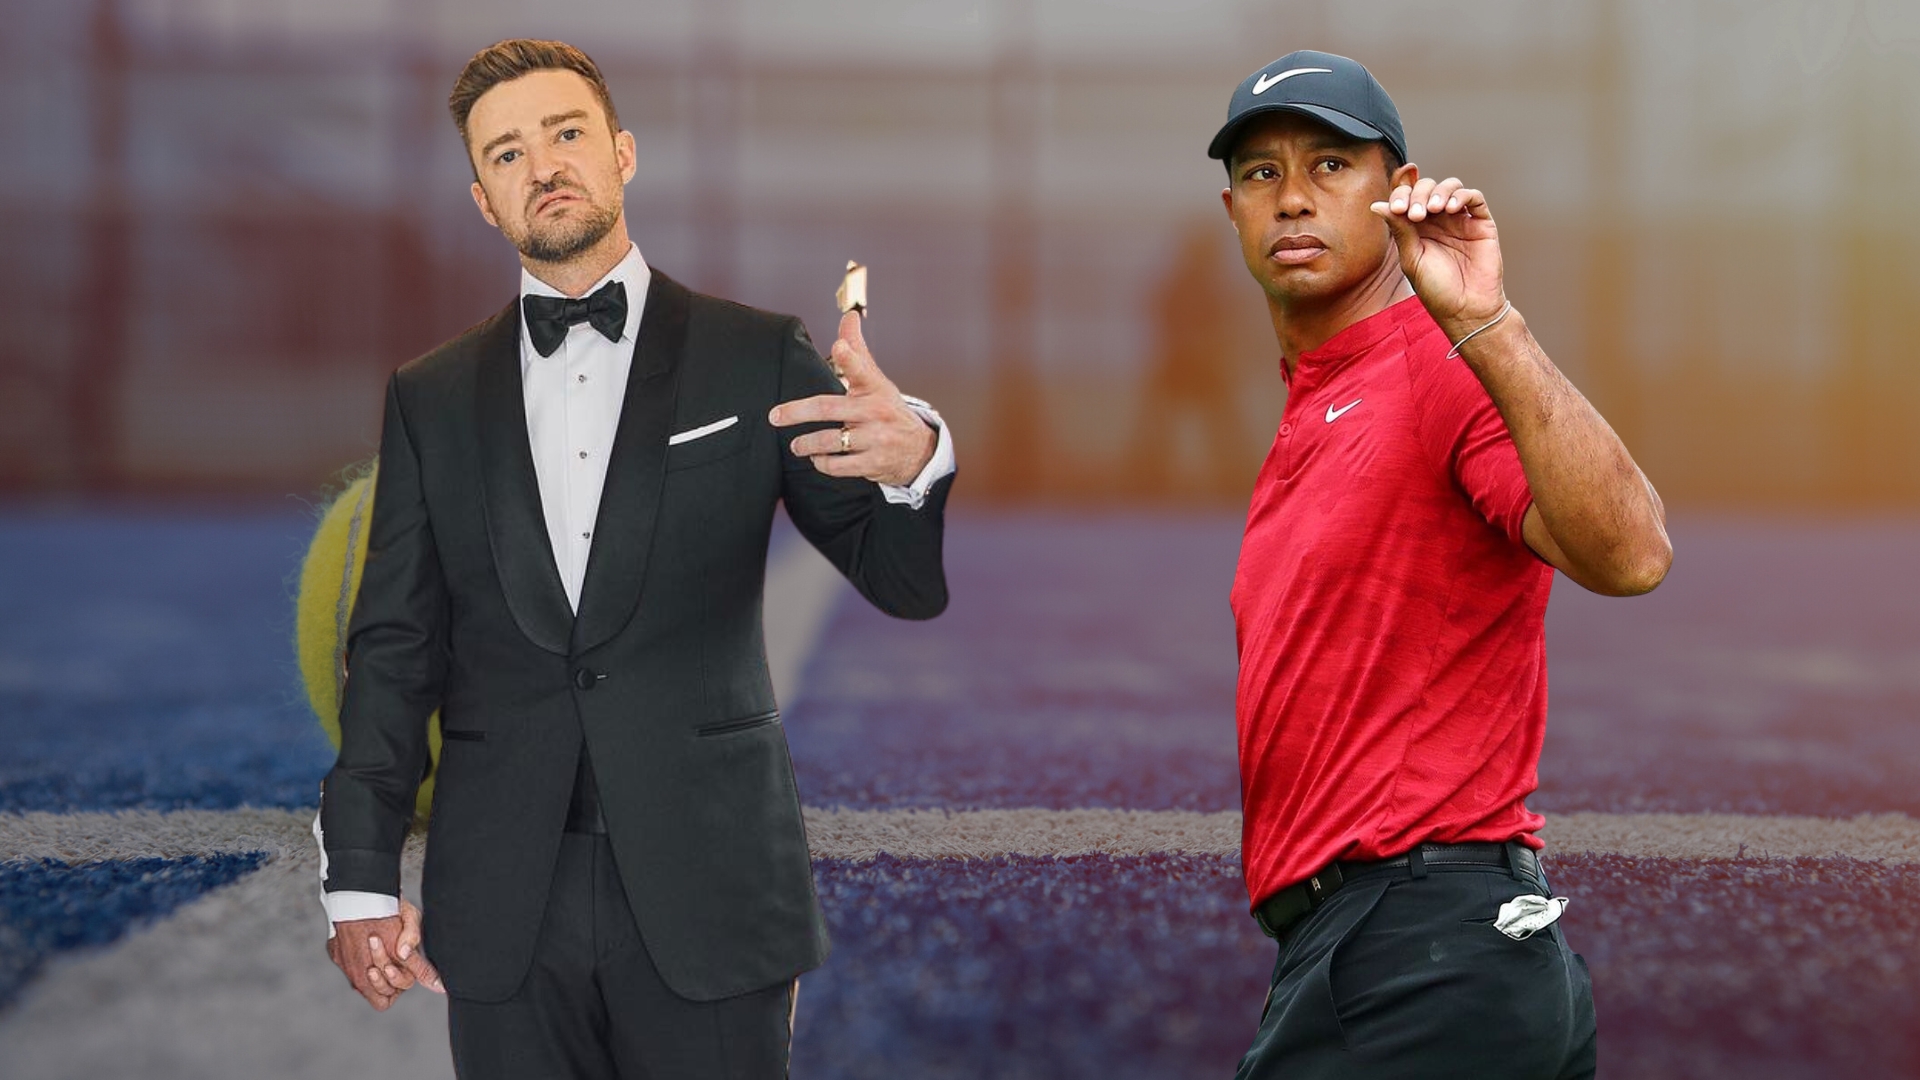 10 canchas de padel ficharon a Tiger Woods y Justin Timberlake